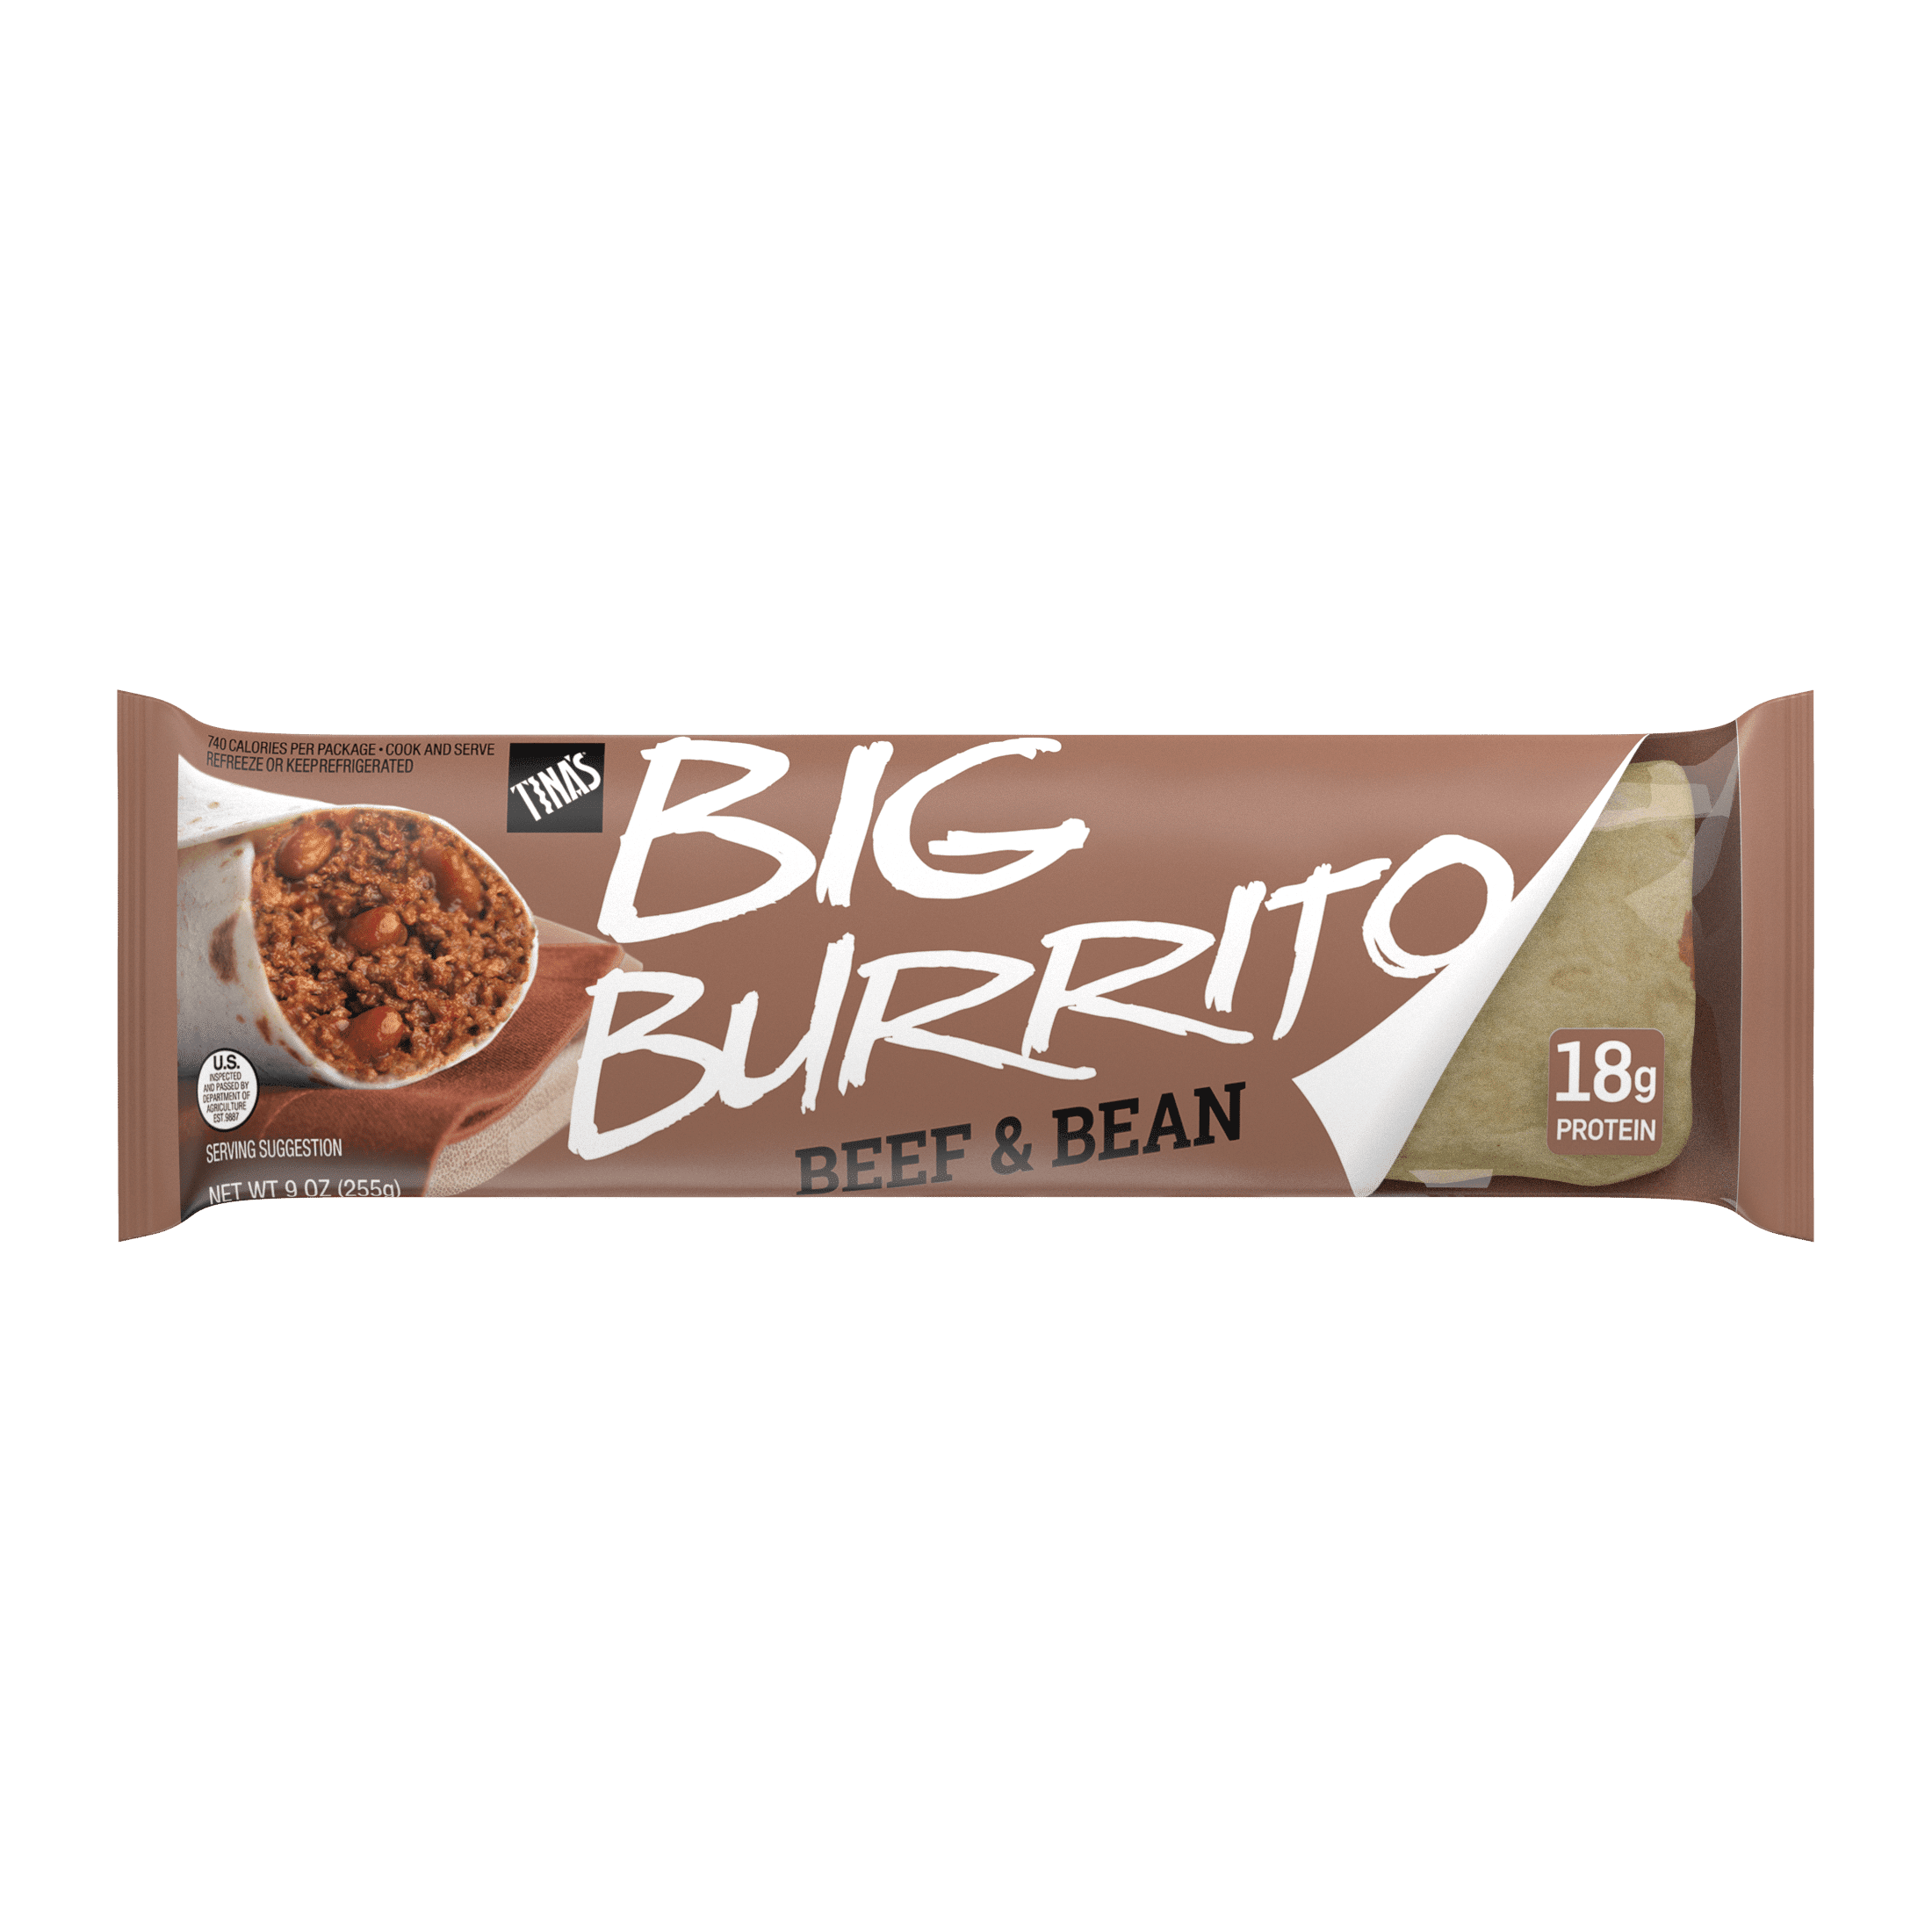 Tina's Big Burrito Beef & Bean, 9 oz, 2 Servings in each package